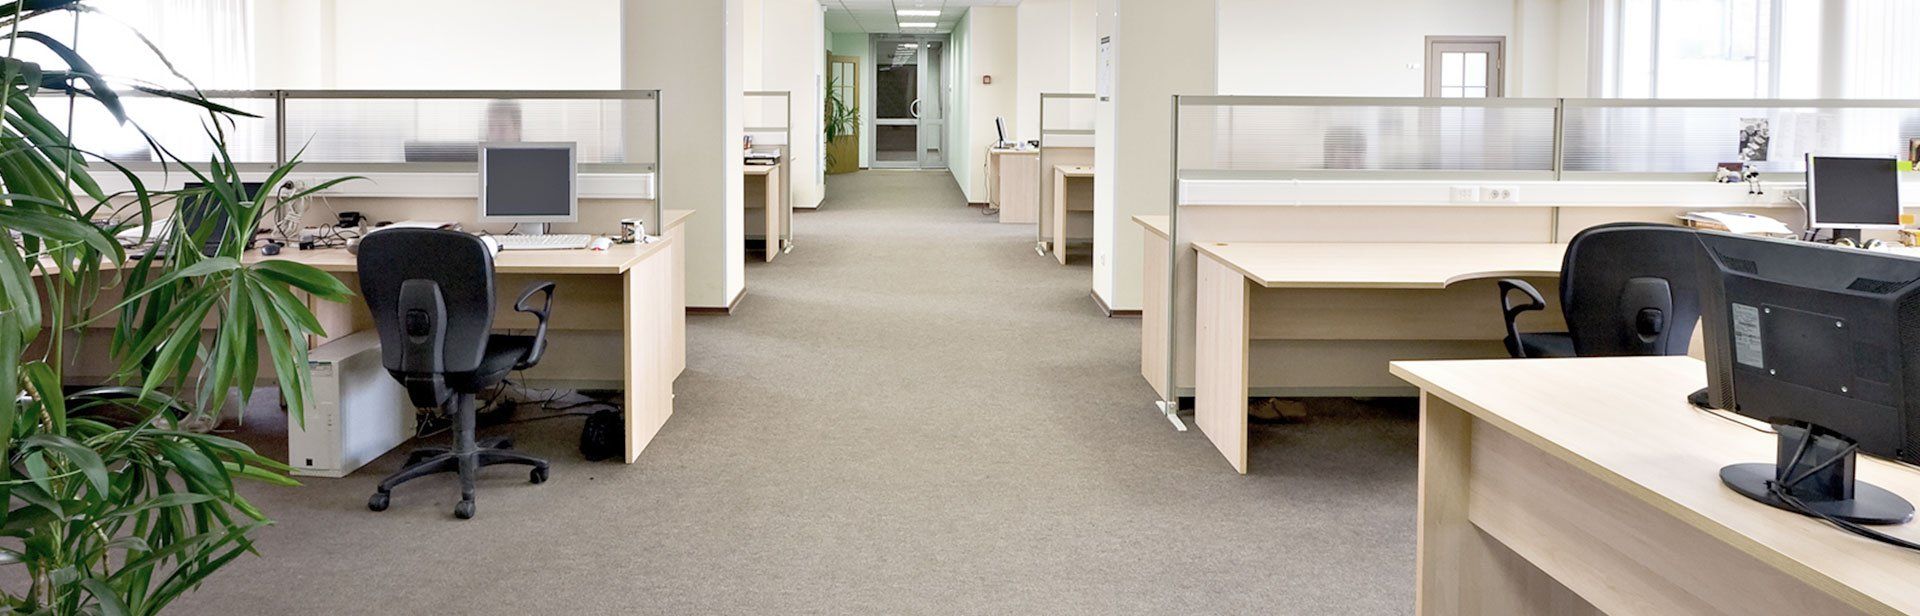 office floor with carpet flooring